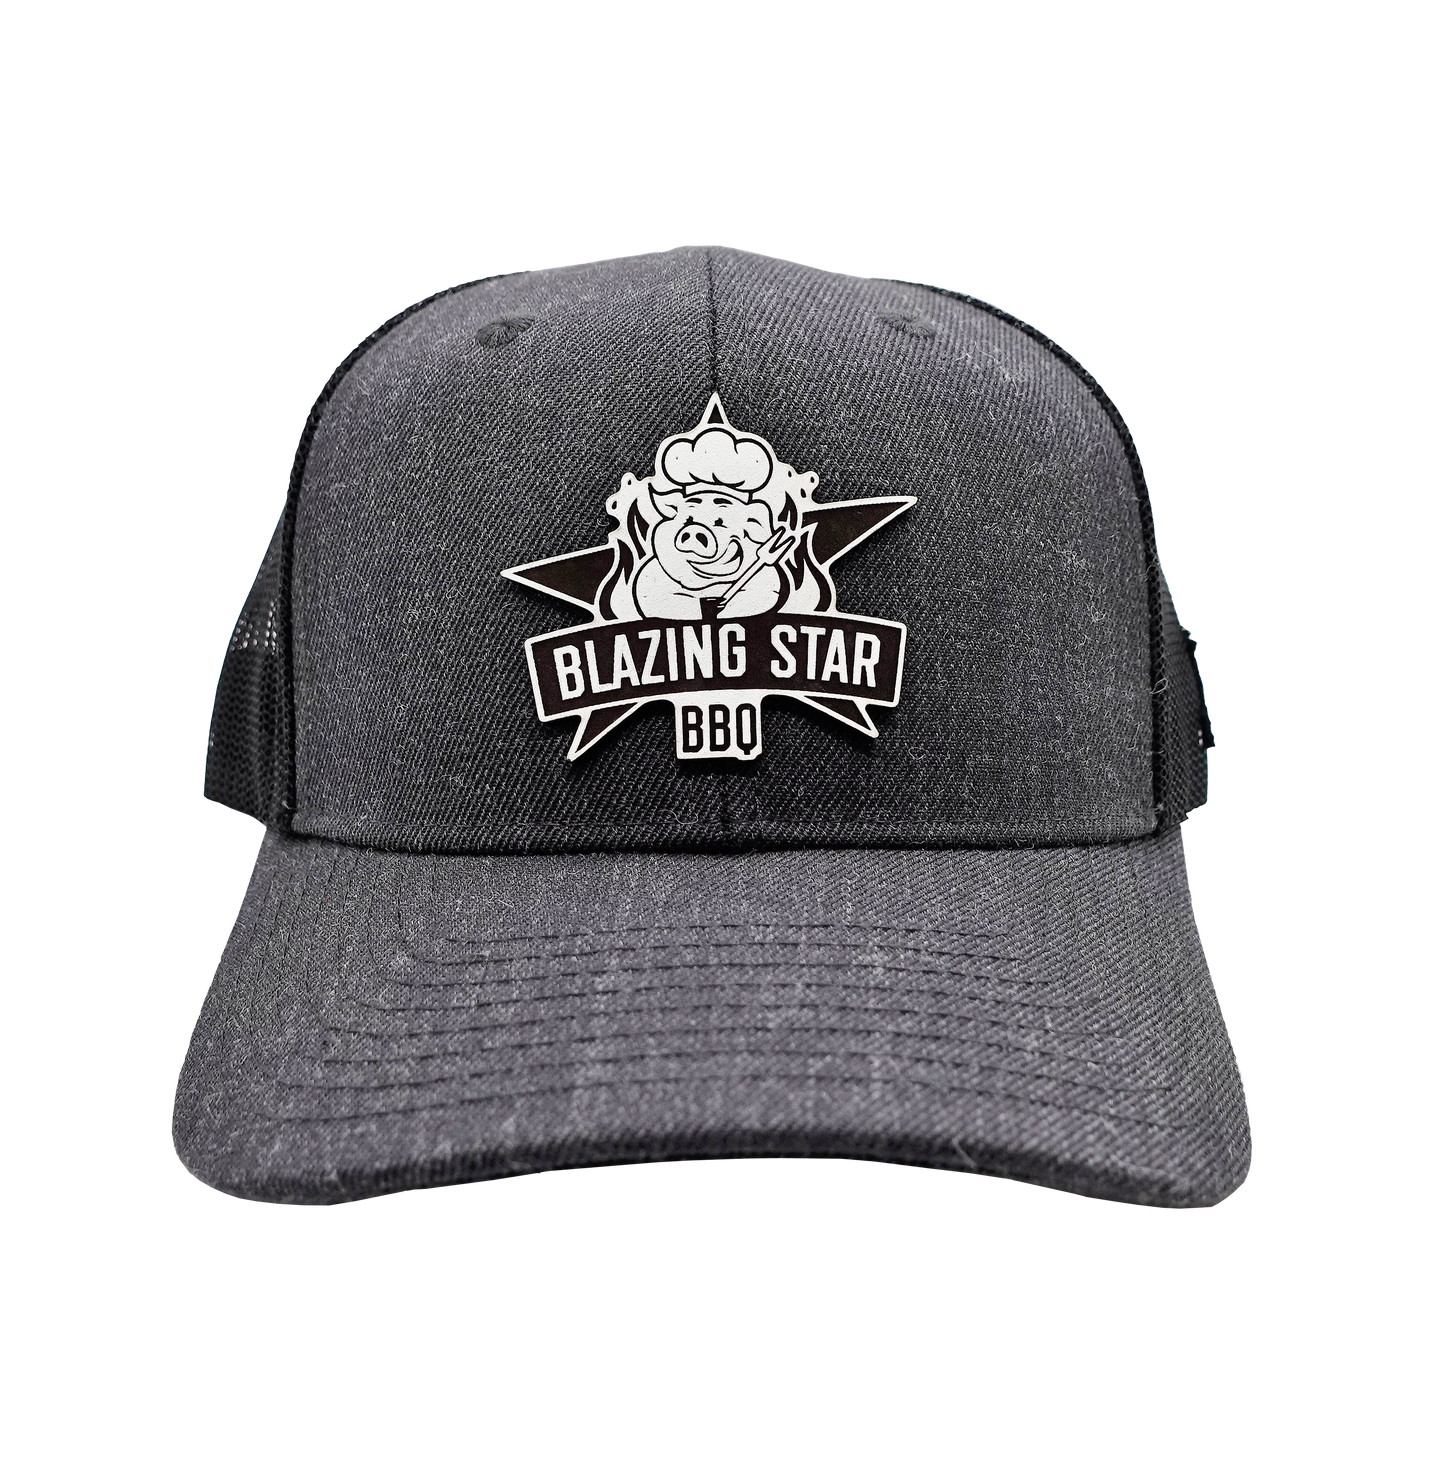 Blazing Star BBQ Charcoal Black Trucker Style Hat